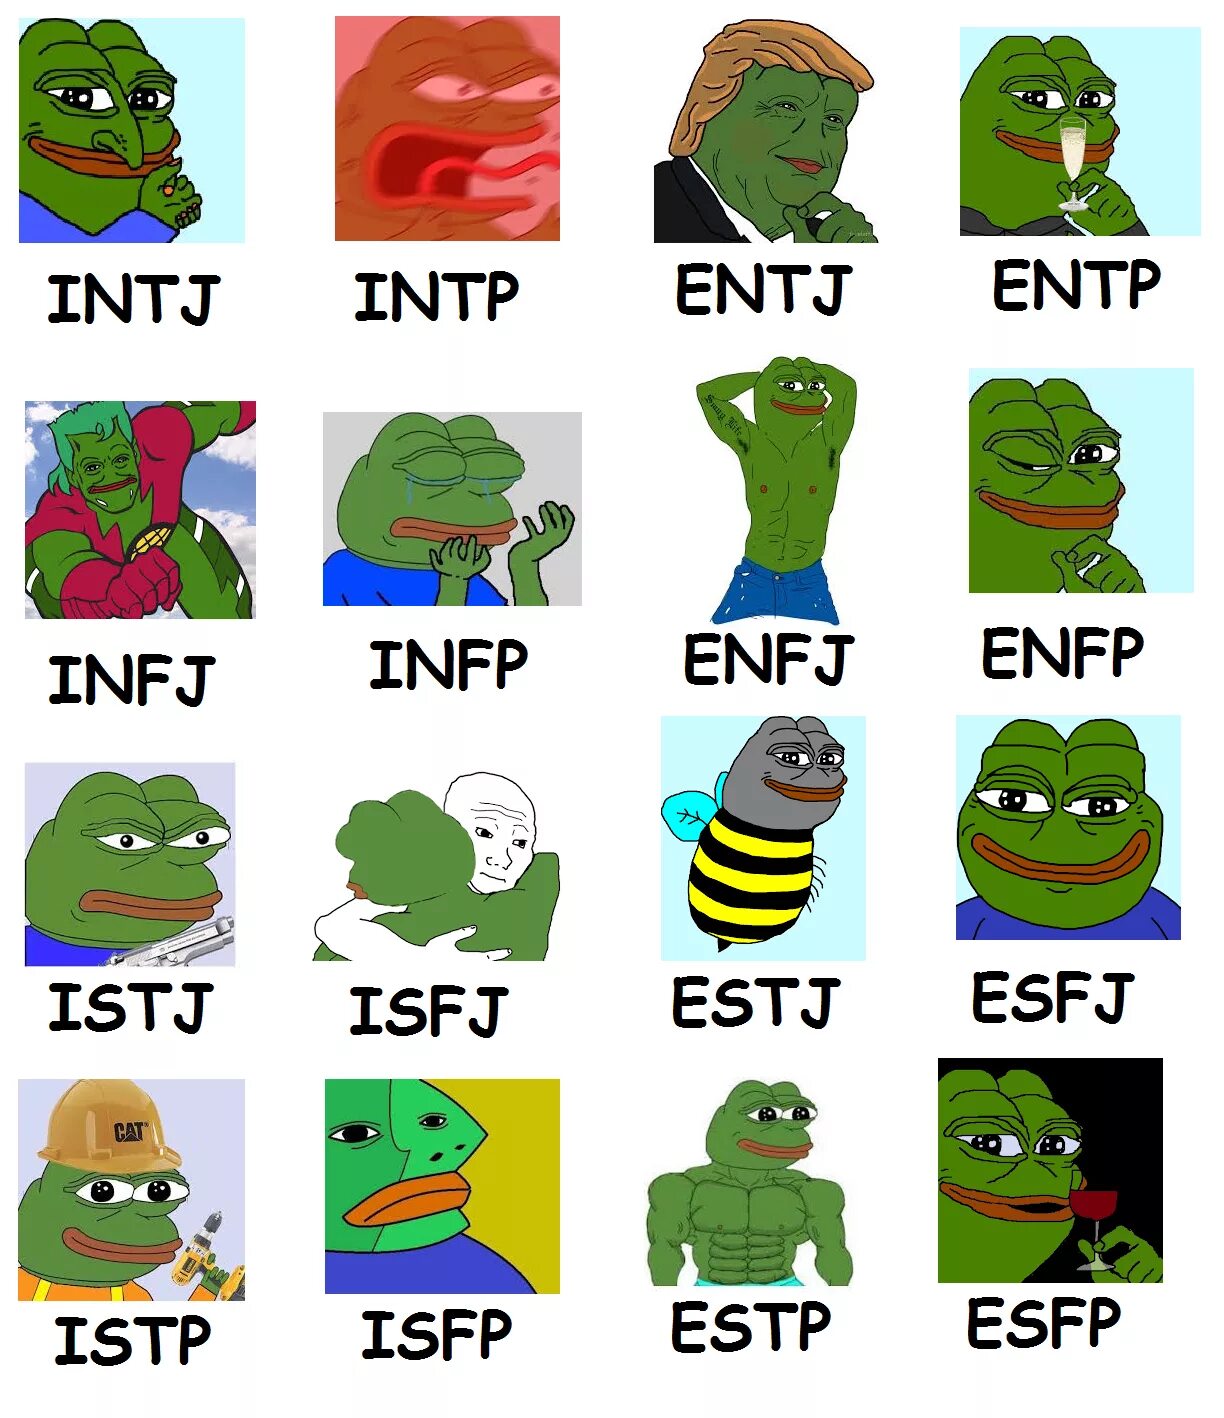 MBTI INFJ персонажи. MBTI 16 personalities ученый. Мемы про типы личности MBTI. ИНТП МБТИ.